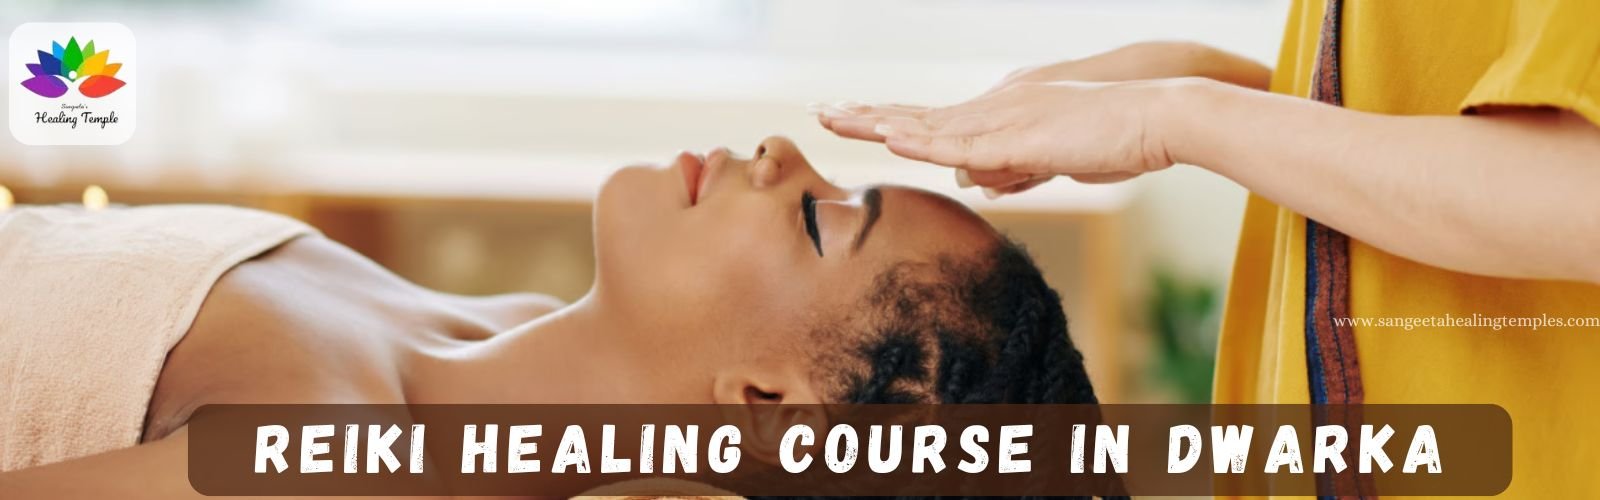 Reiki Healing Course in Dwarka